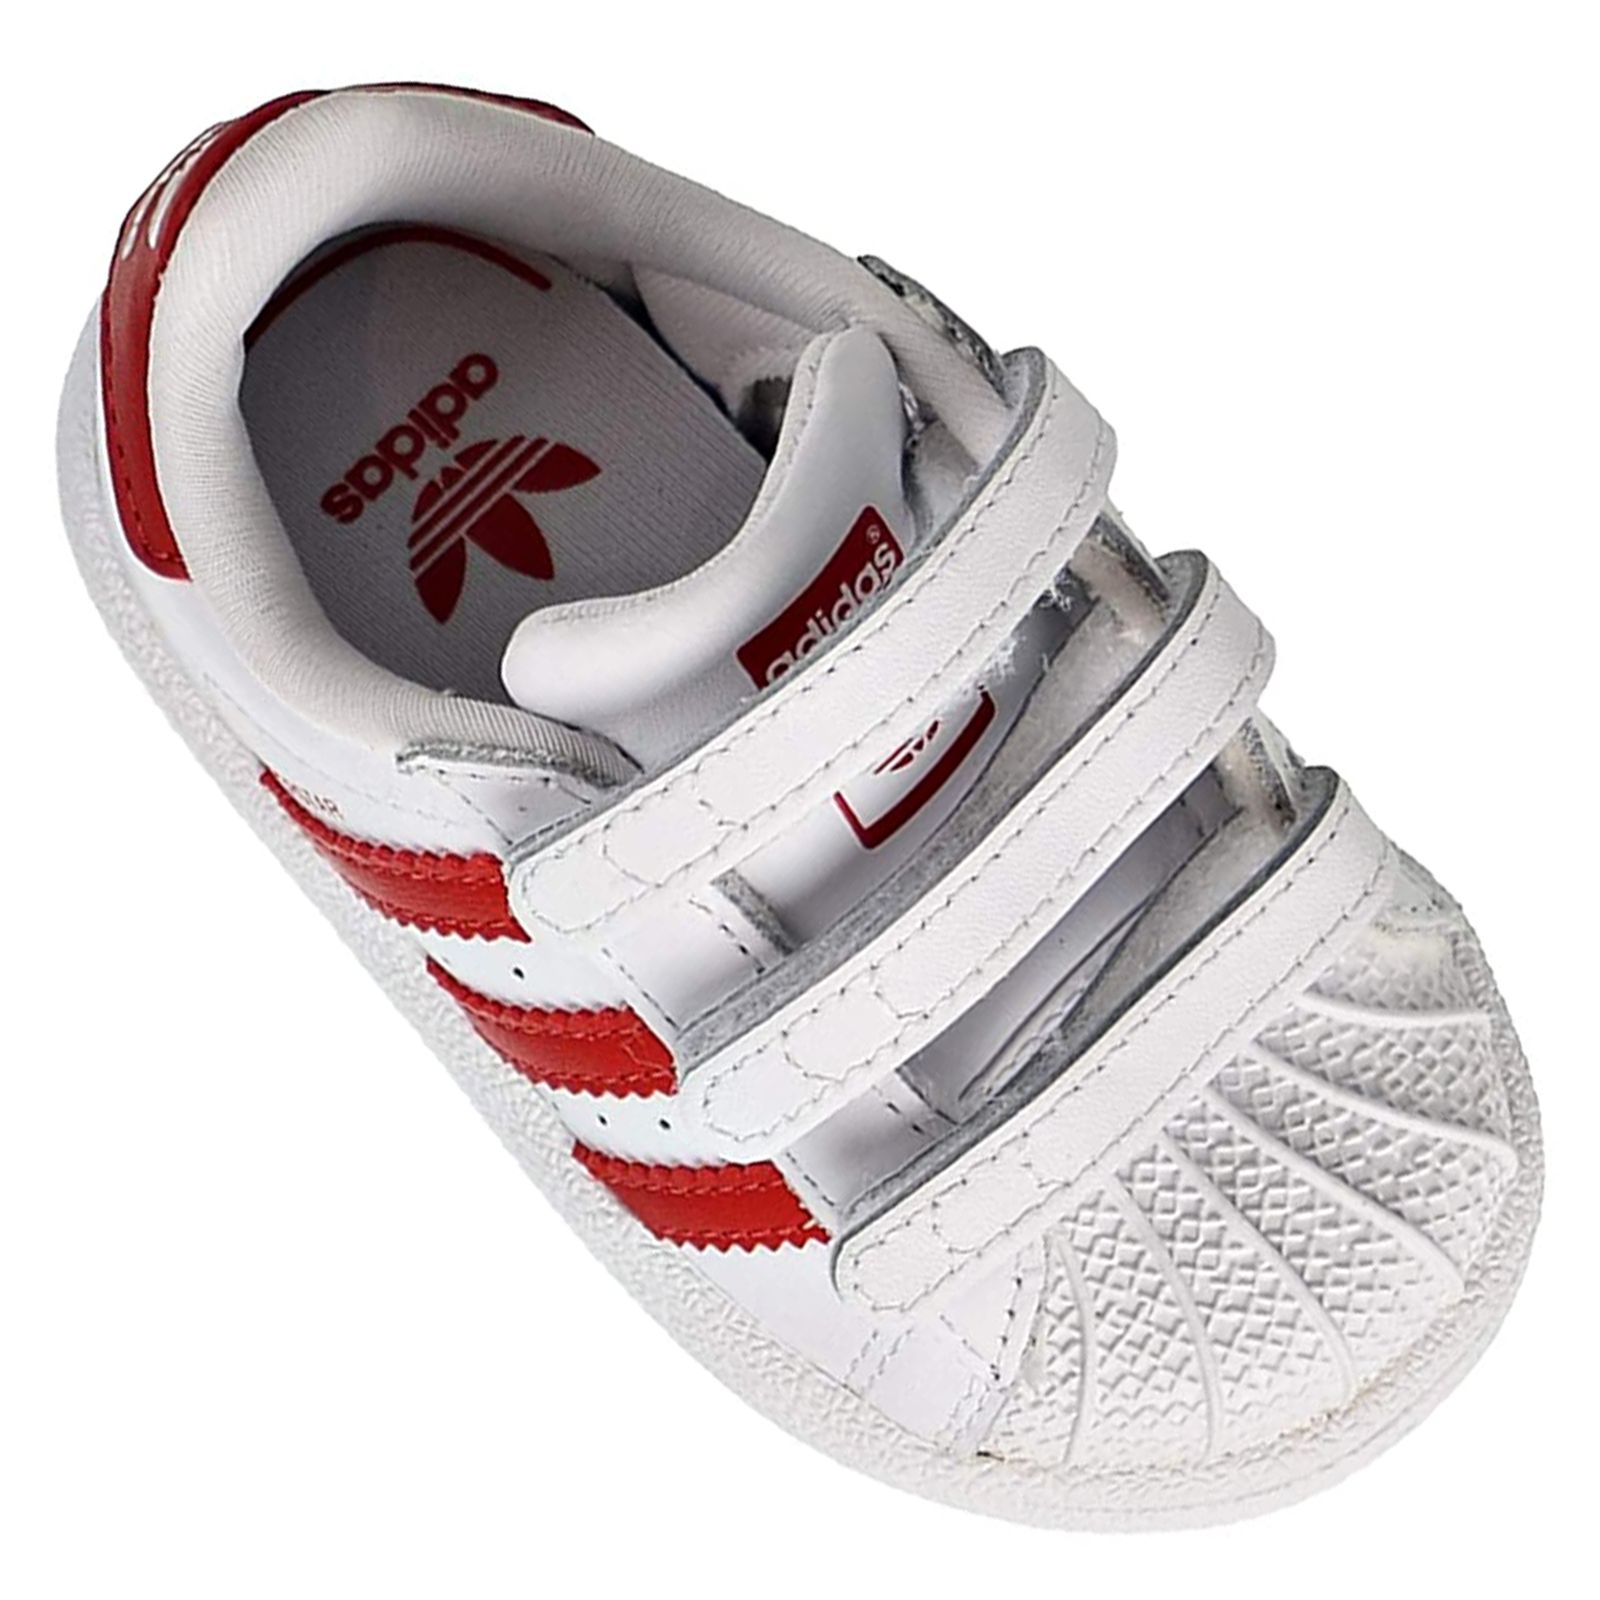 adidas Superstar Kinder Mädchen 22 DURCHSTARTEER Weiß Turnschuhe Rot Schuhe Jungen Sneaker 